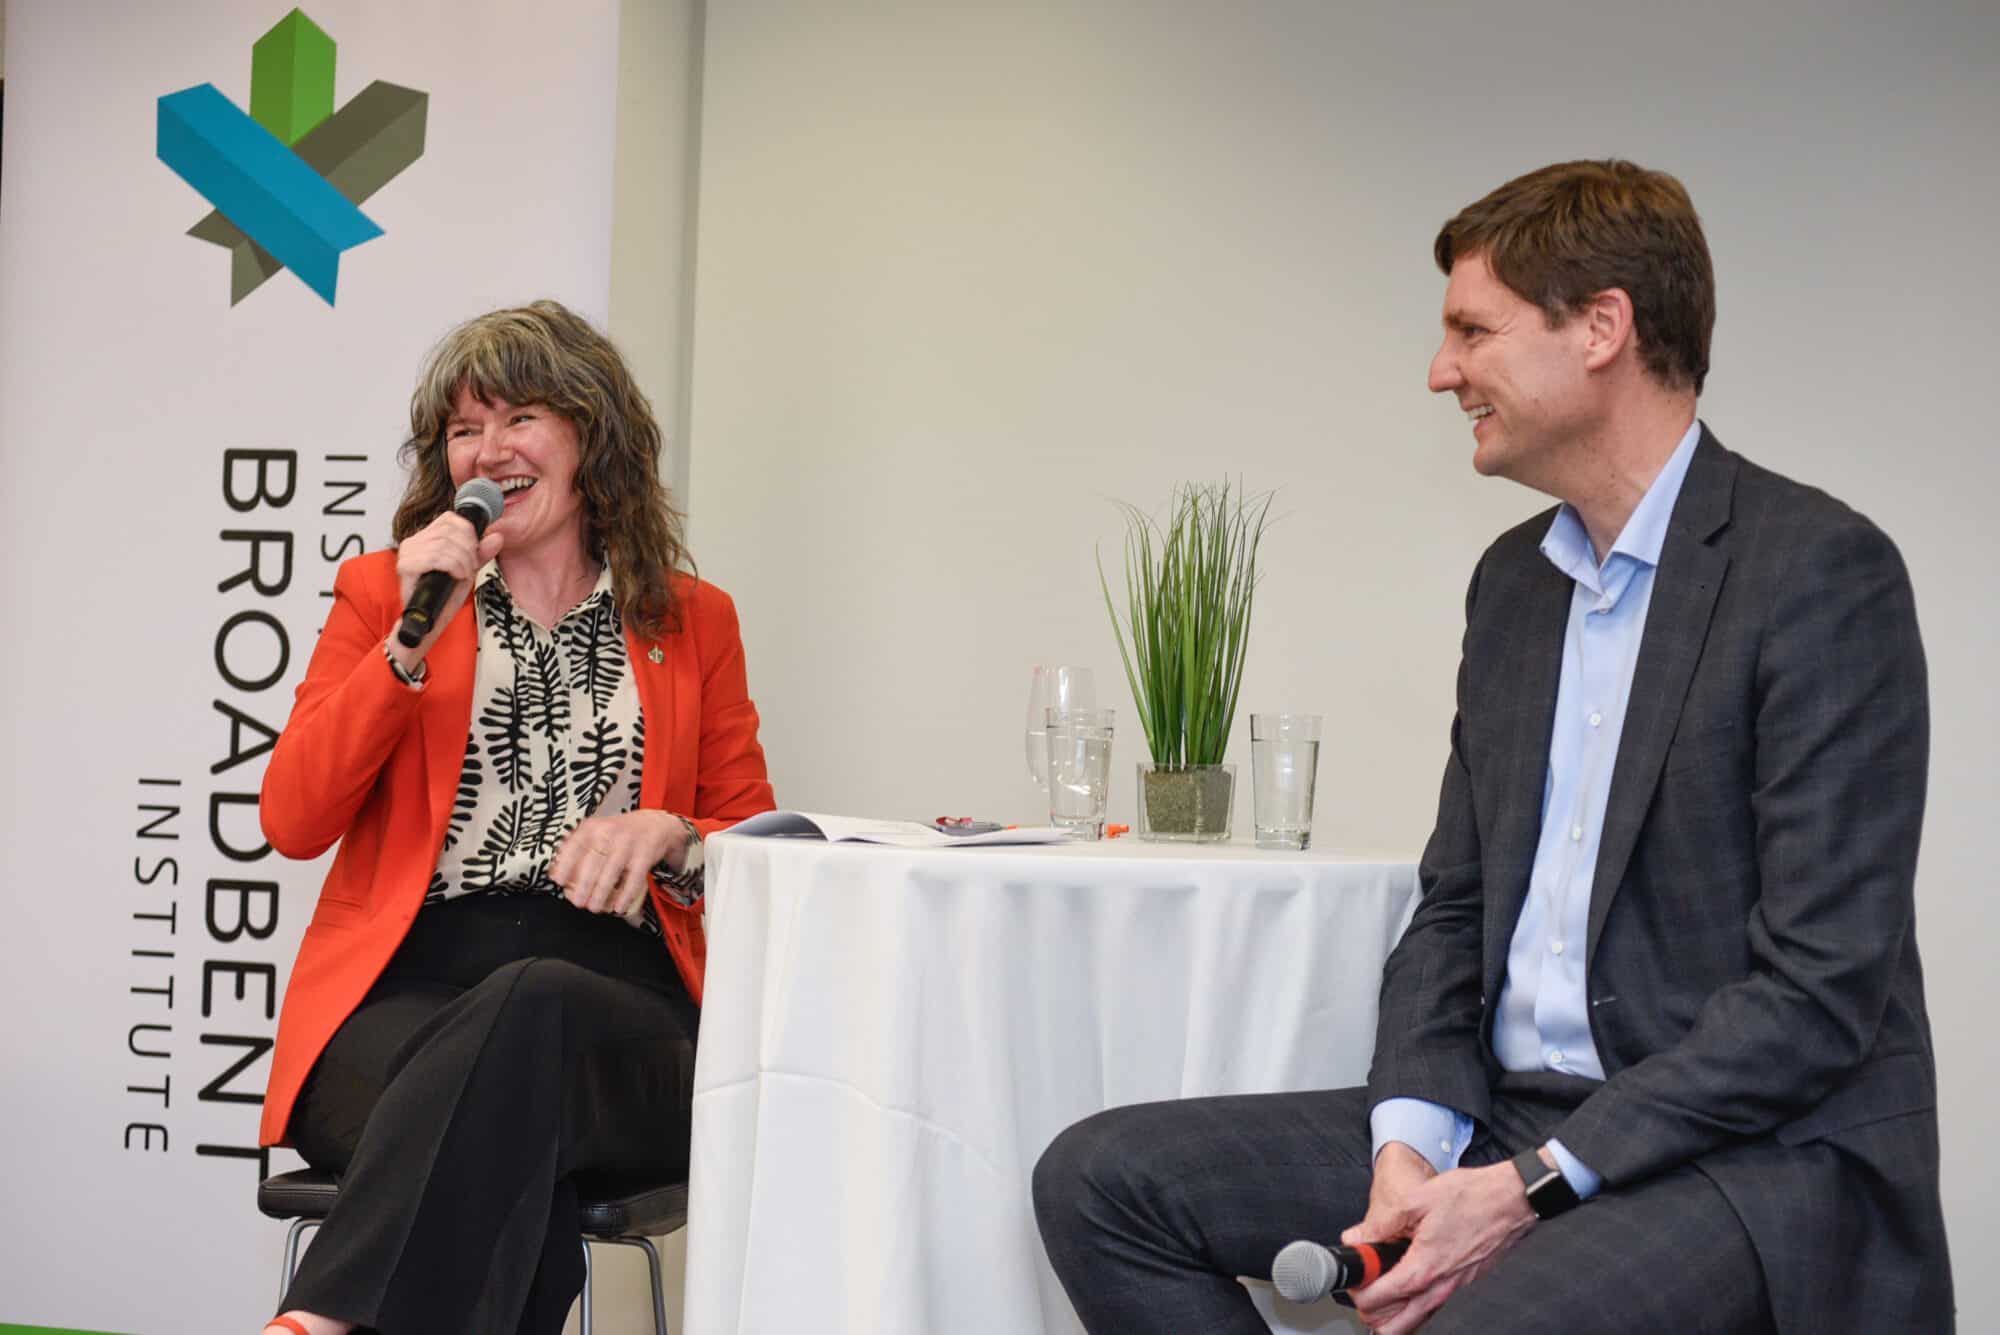 BC Premier David Eby and Megan Leslie chat about Progressive Governance in Unprecedented Times.